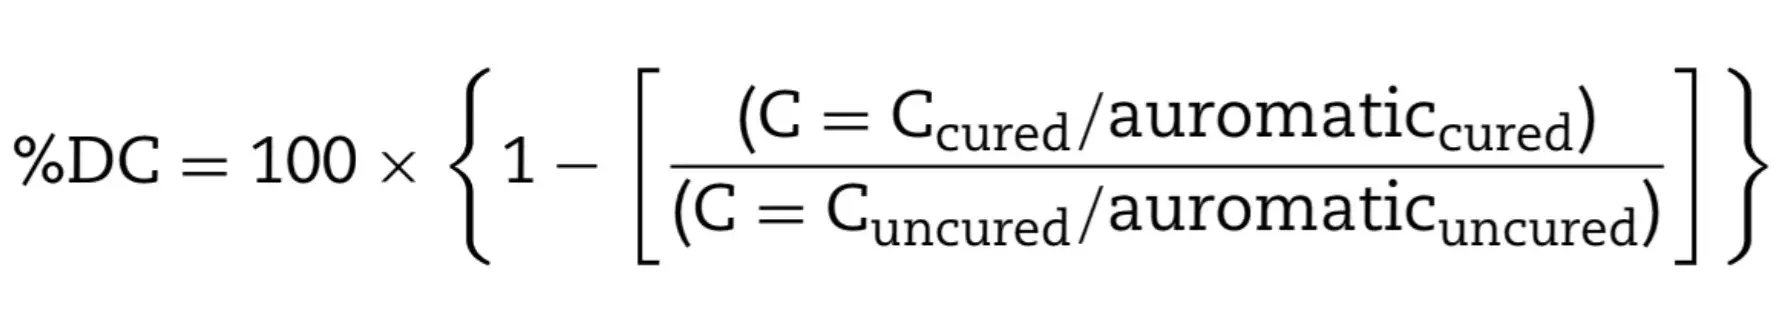 degree of C=C conversion 